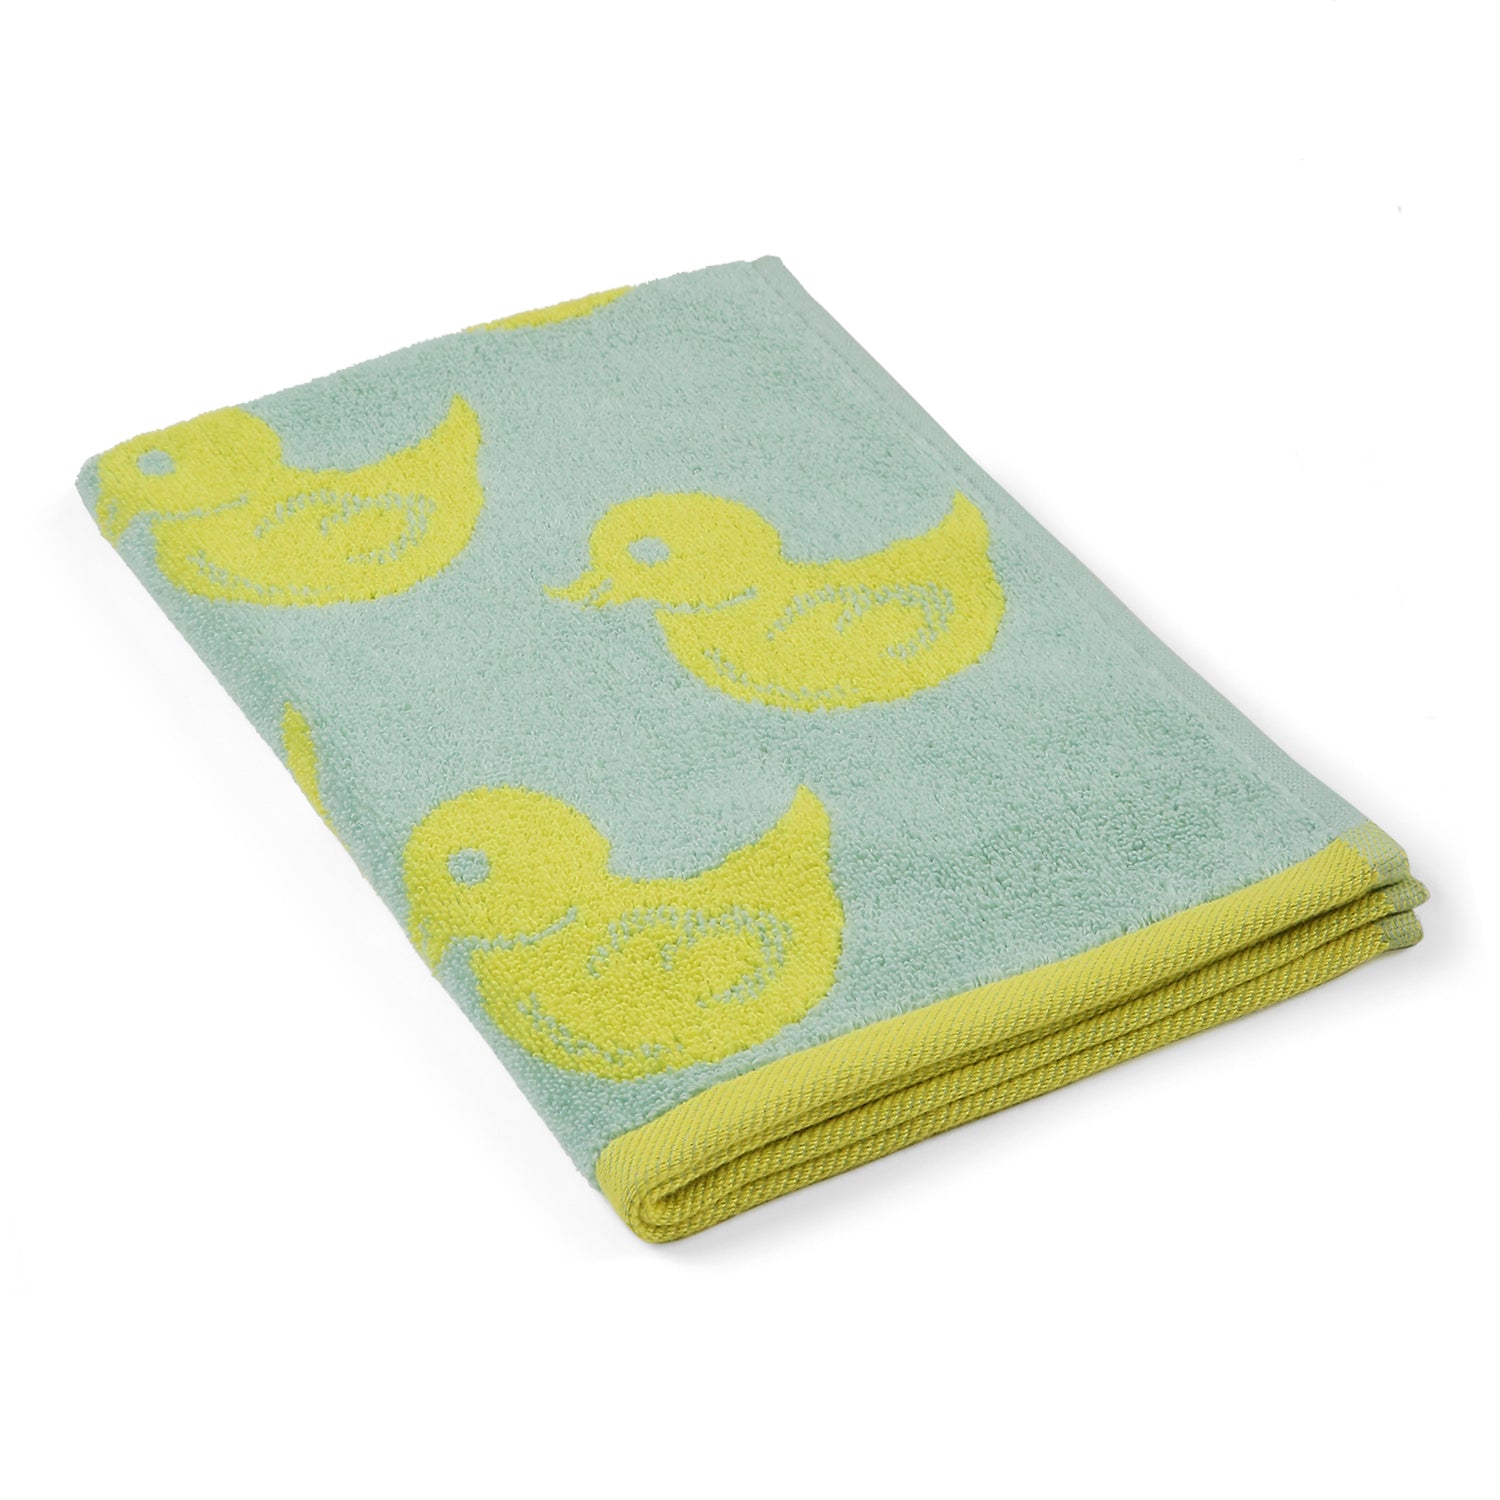 Yellow Ducky Hand Towel